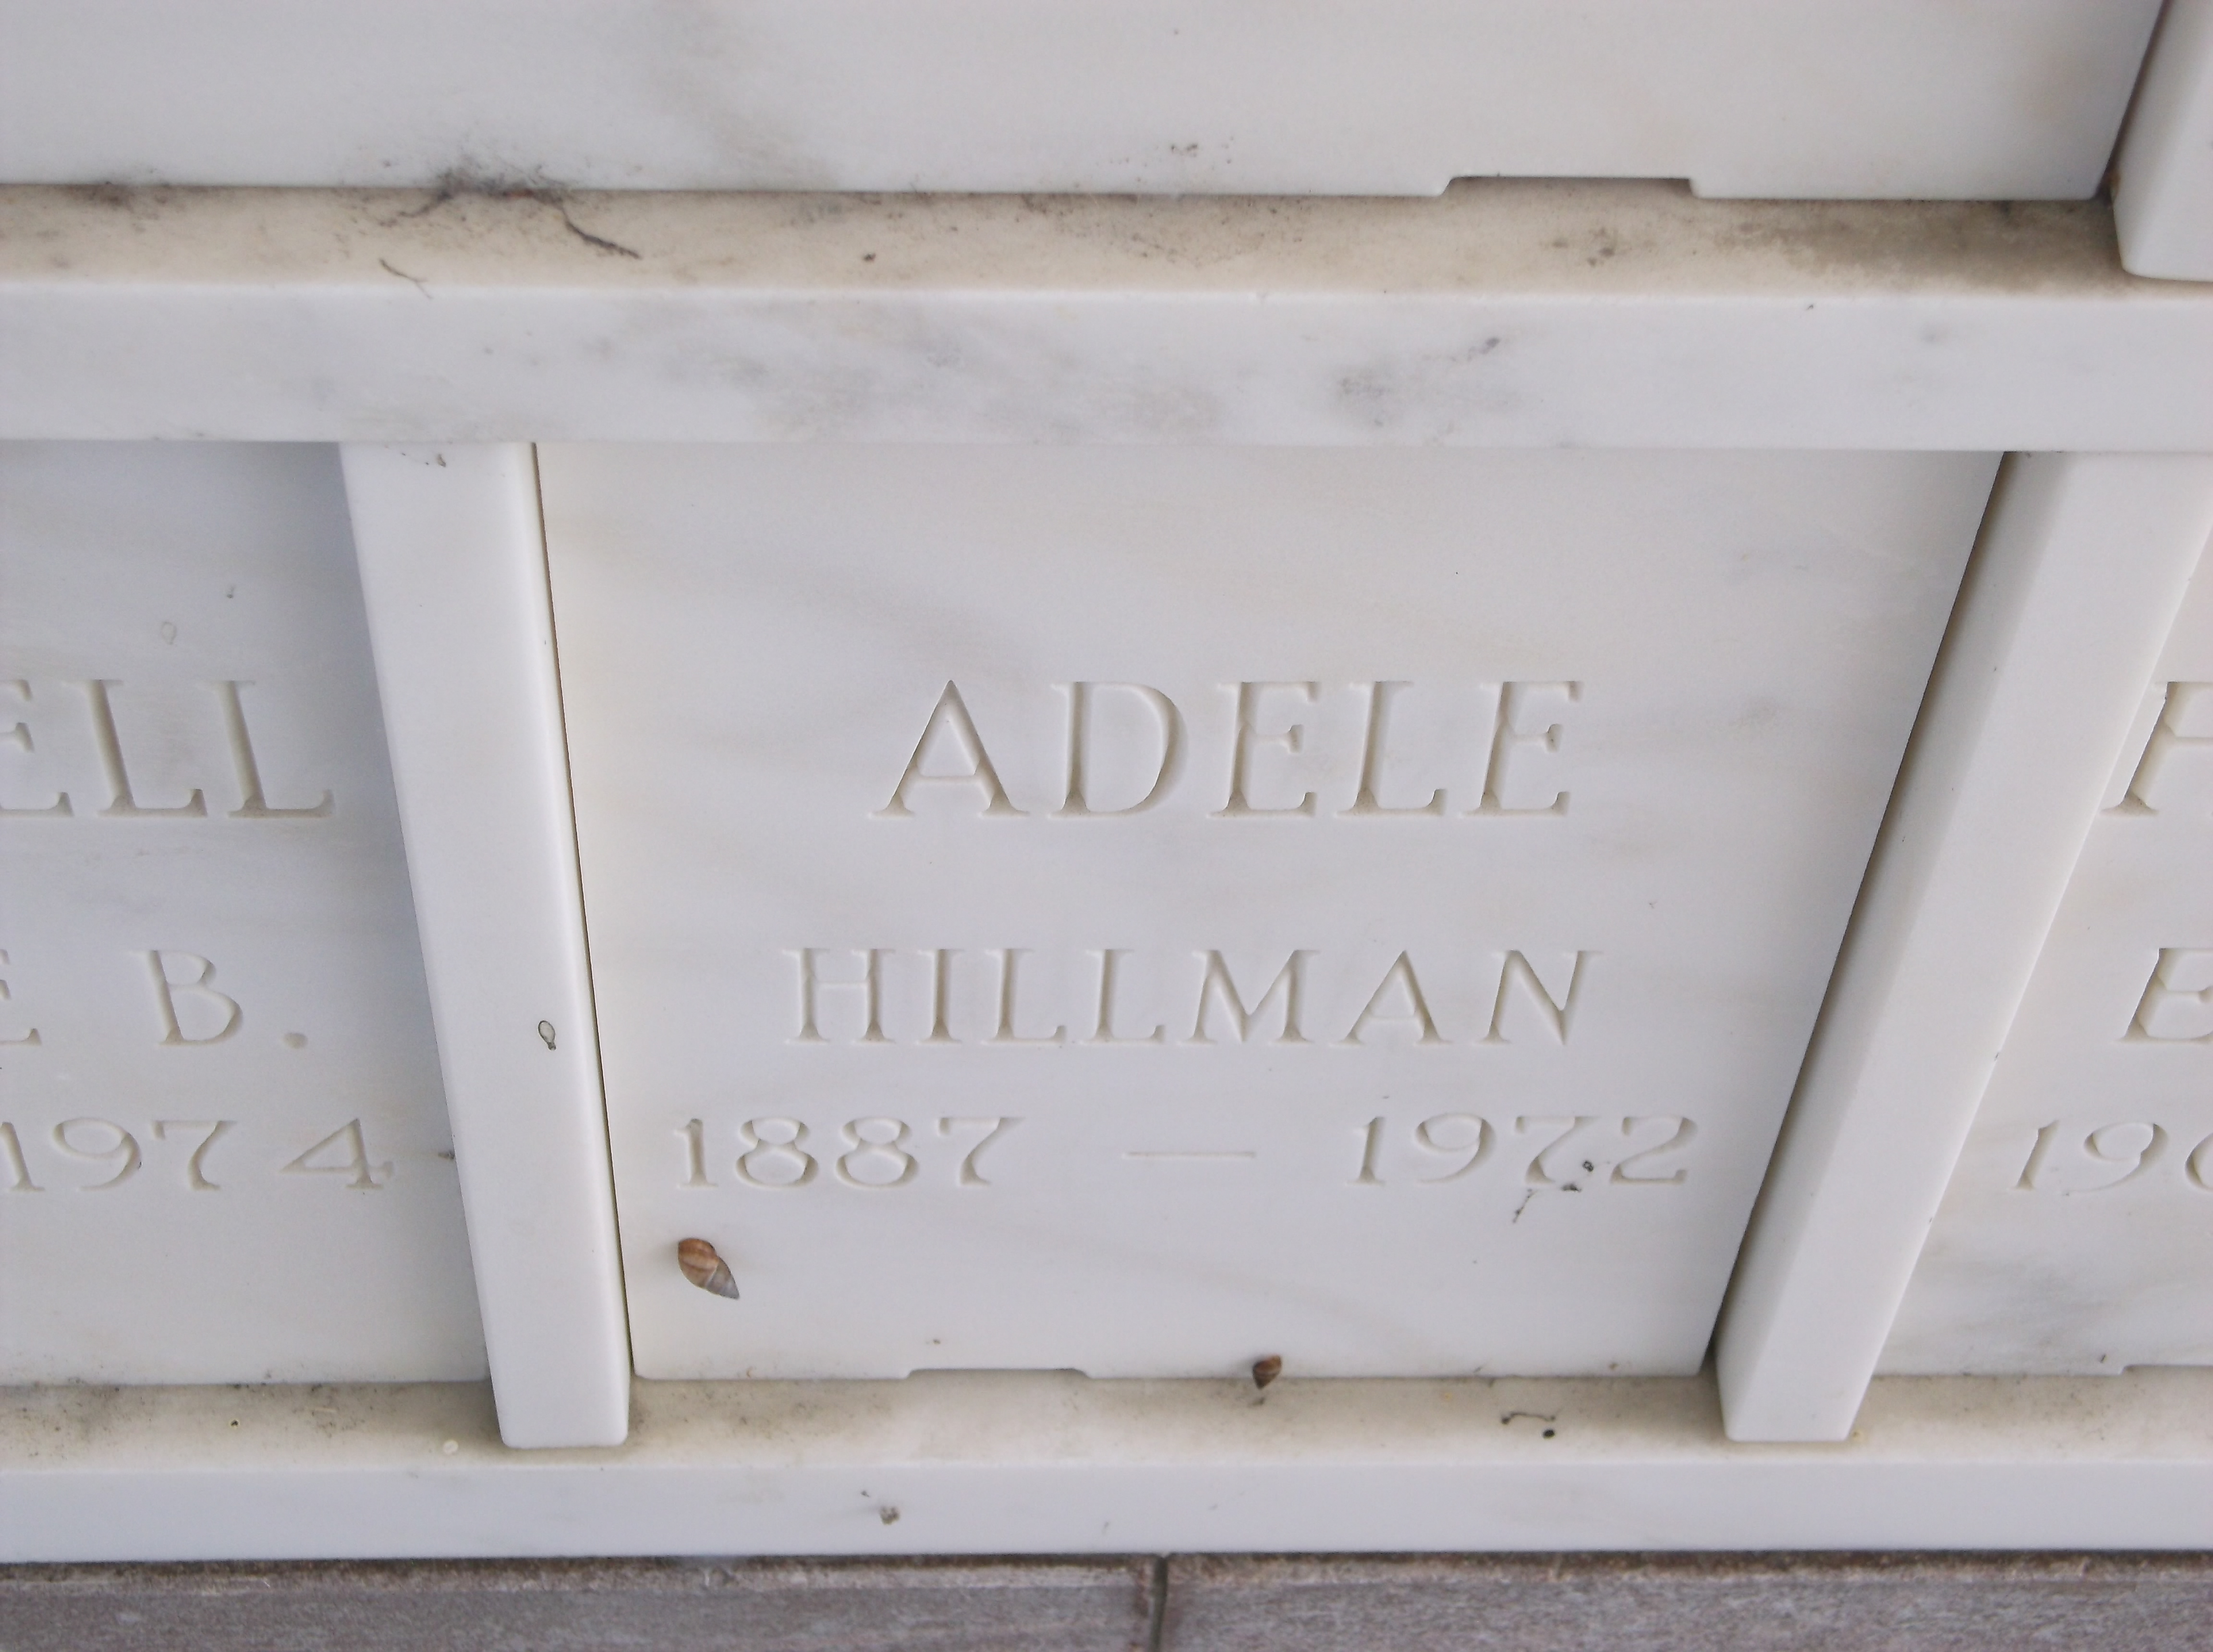 Adele Hillman